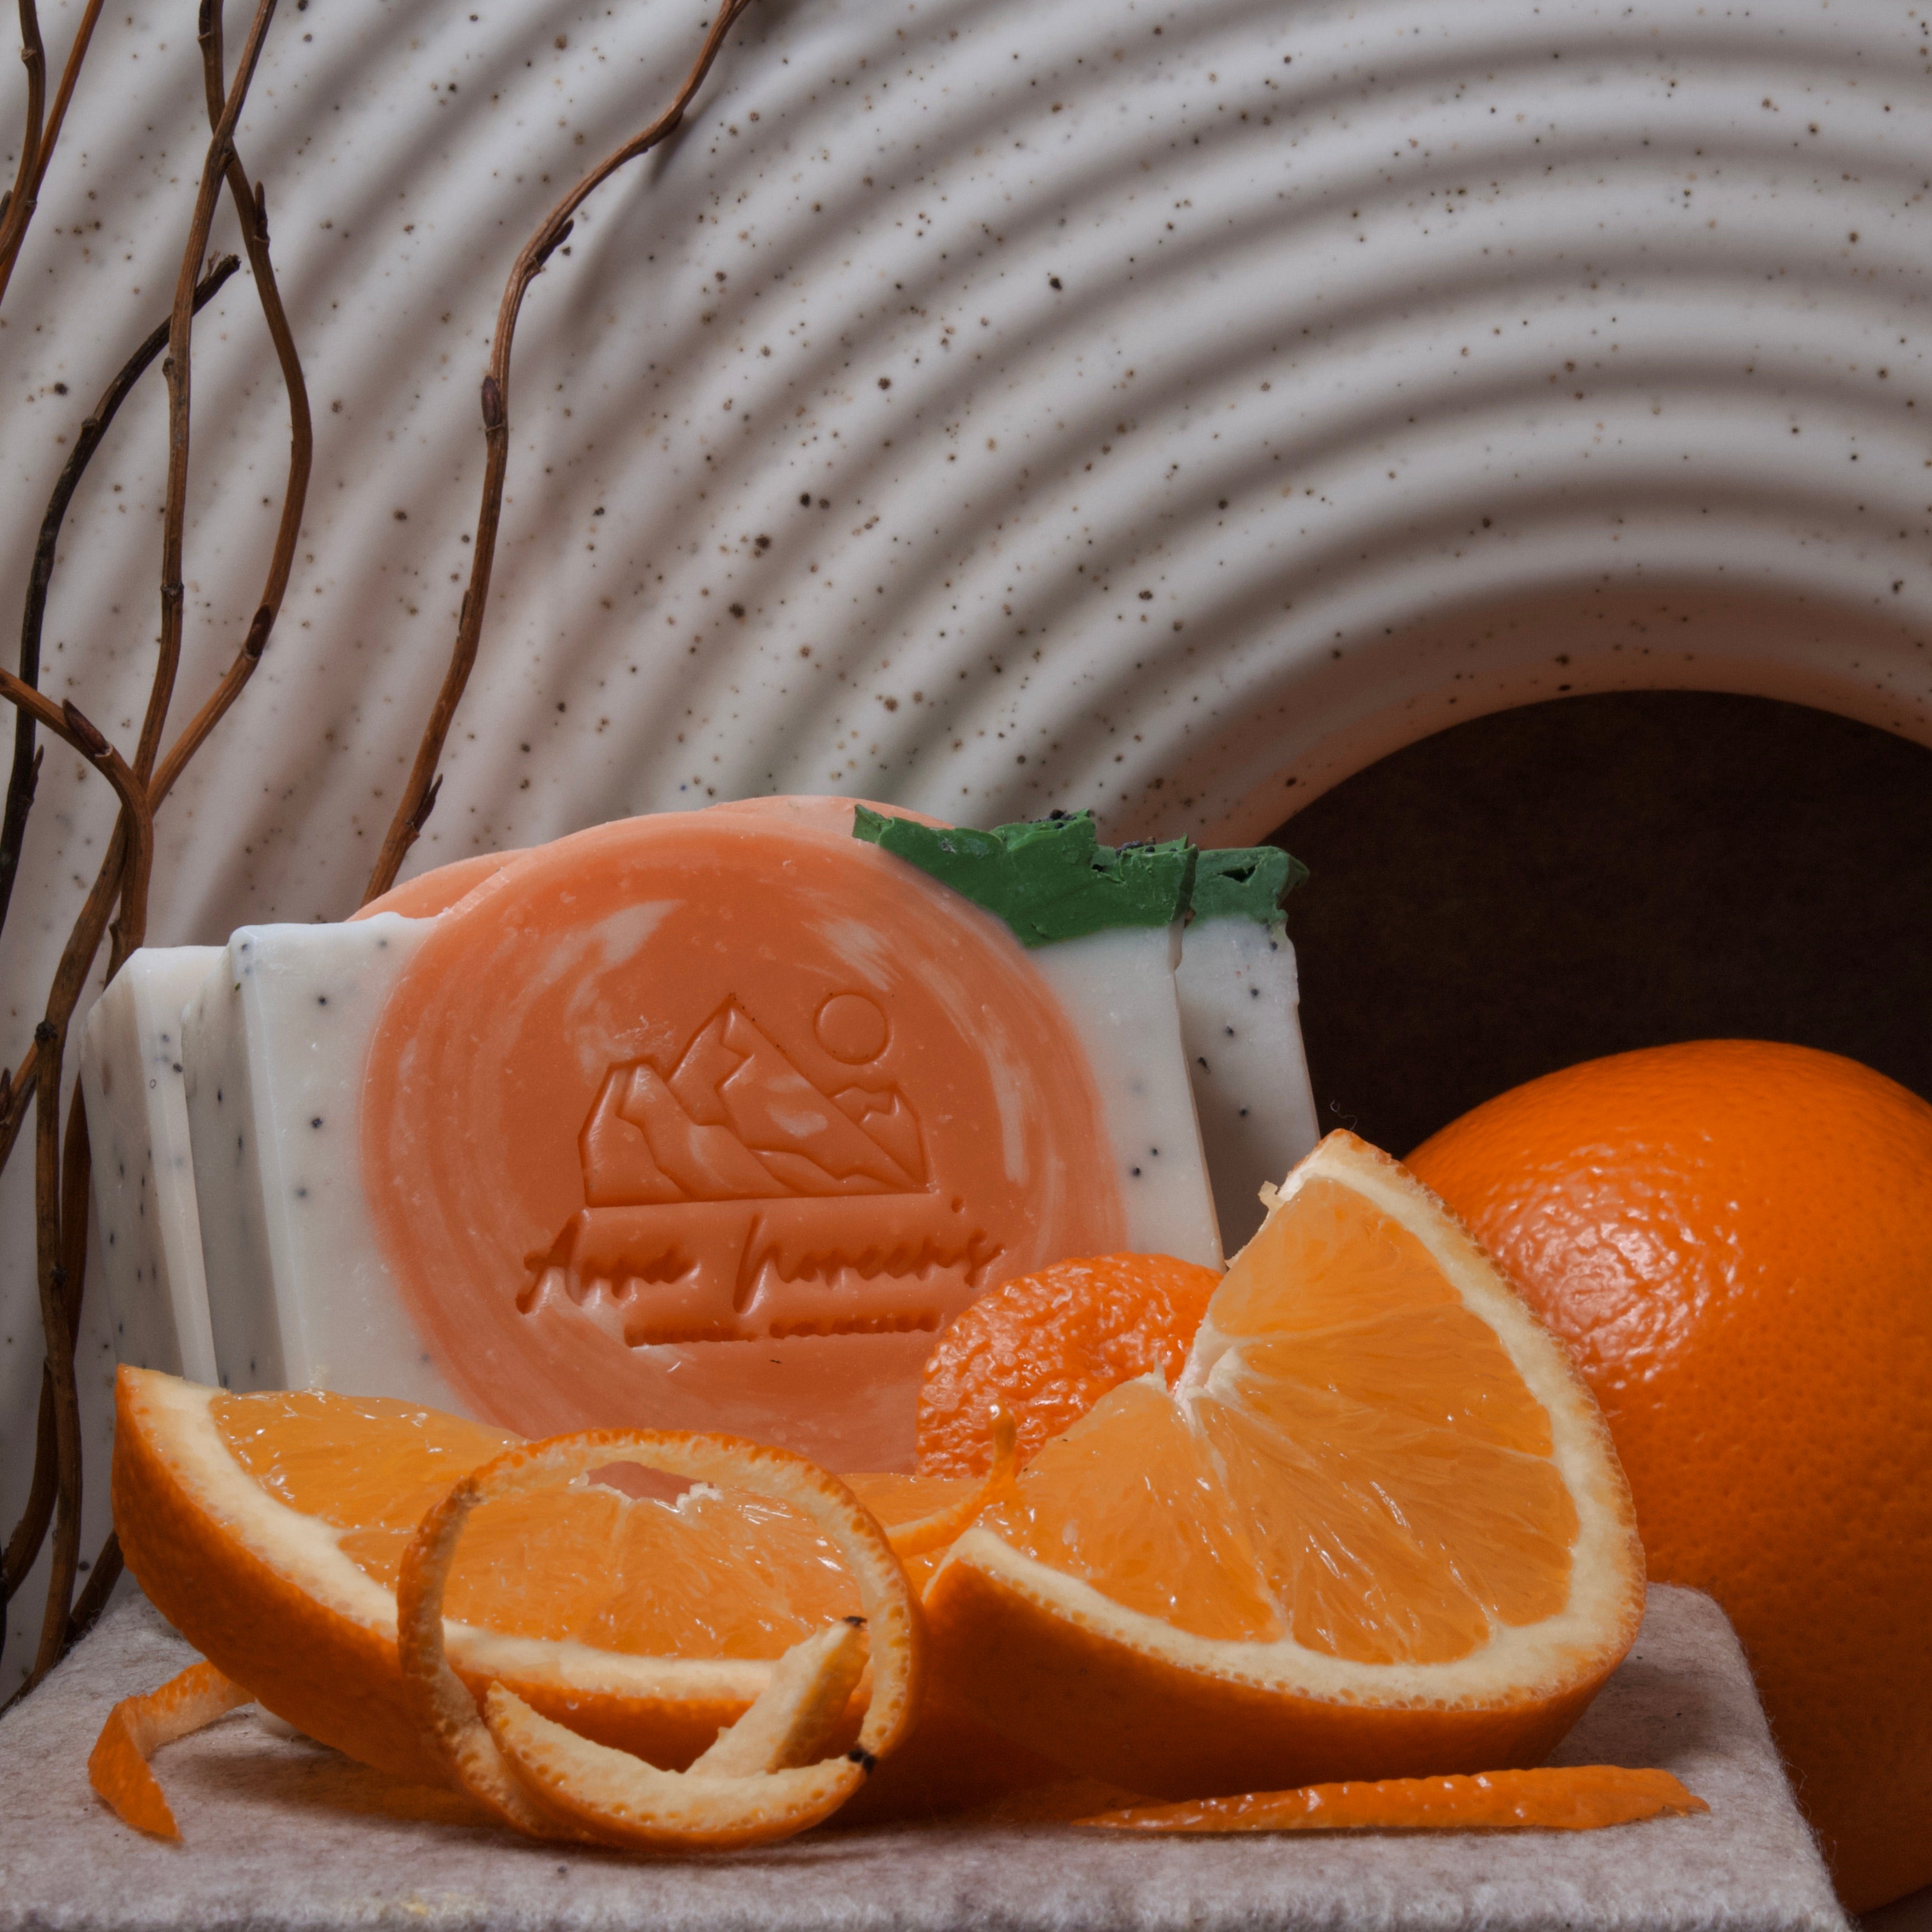 Handmade Orange Blossom with Neroli & Sweet Orange Soap - The Aromatherapy  Shoppe Virginia Beach